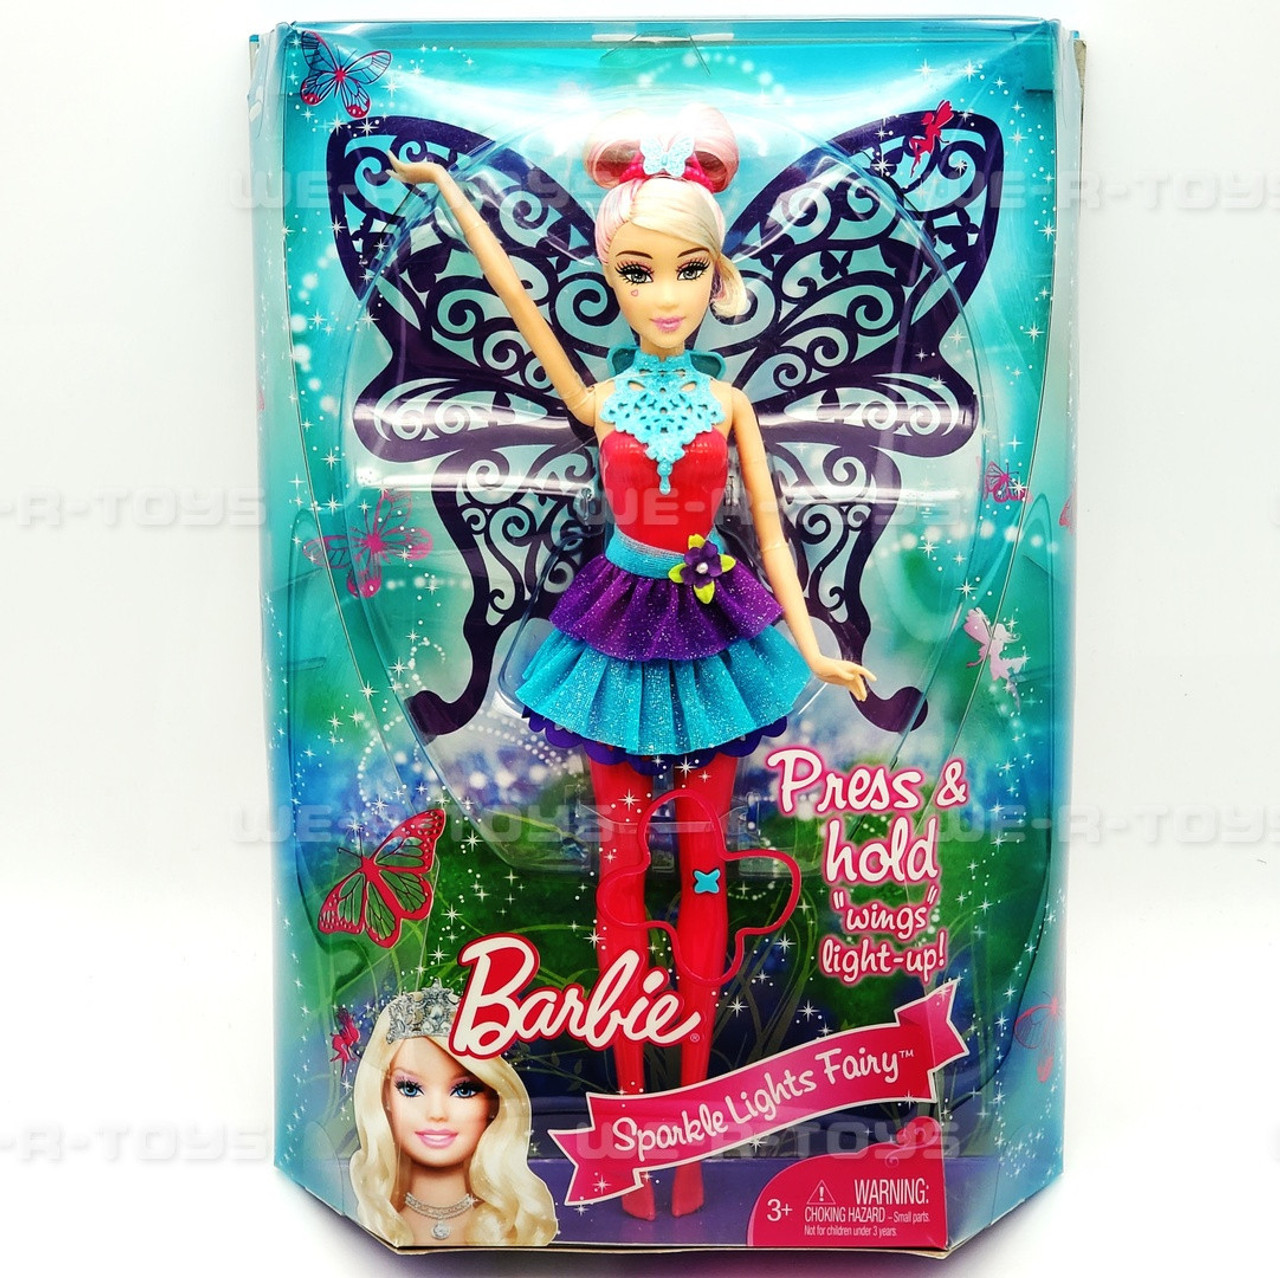 Barbie Dreamtopia Fairy Doll Orange Hair Wings Tiara Toy for Children GJK01  : Amazon.in: Toys & Games